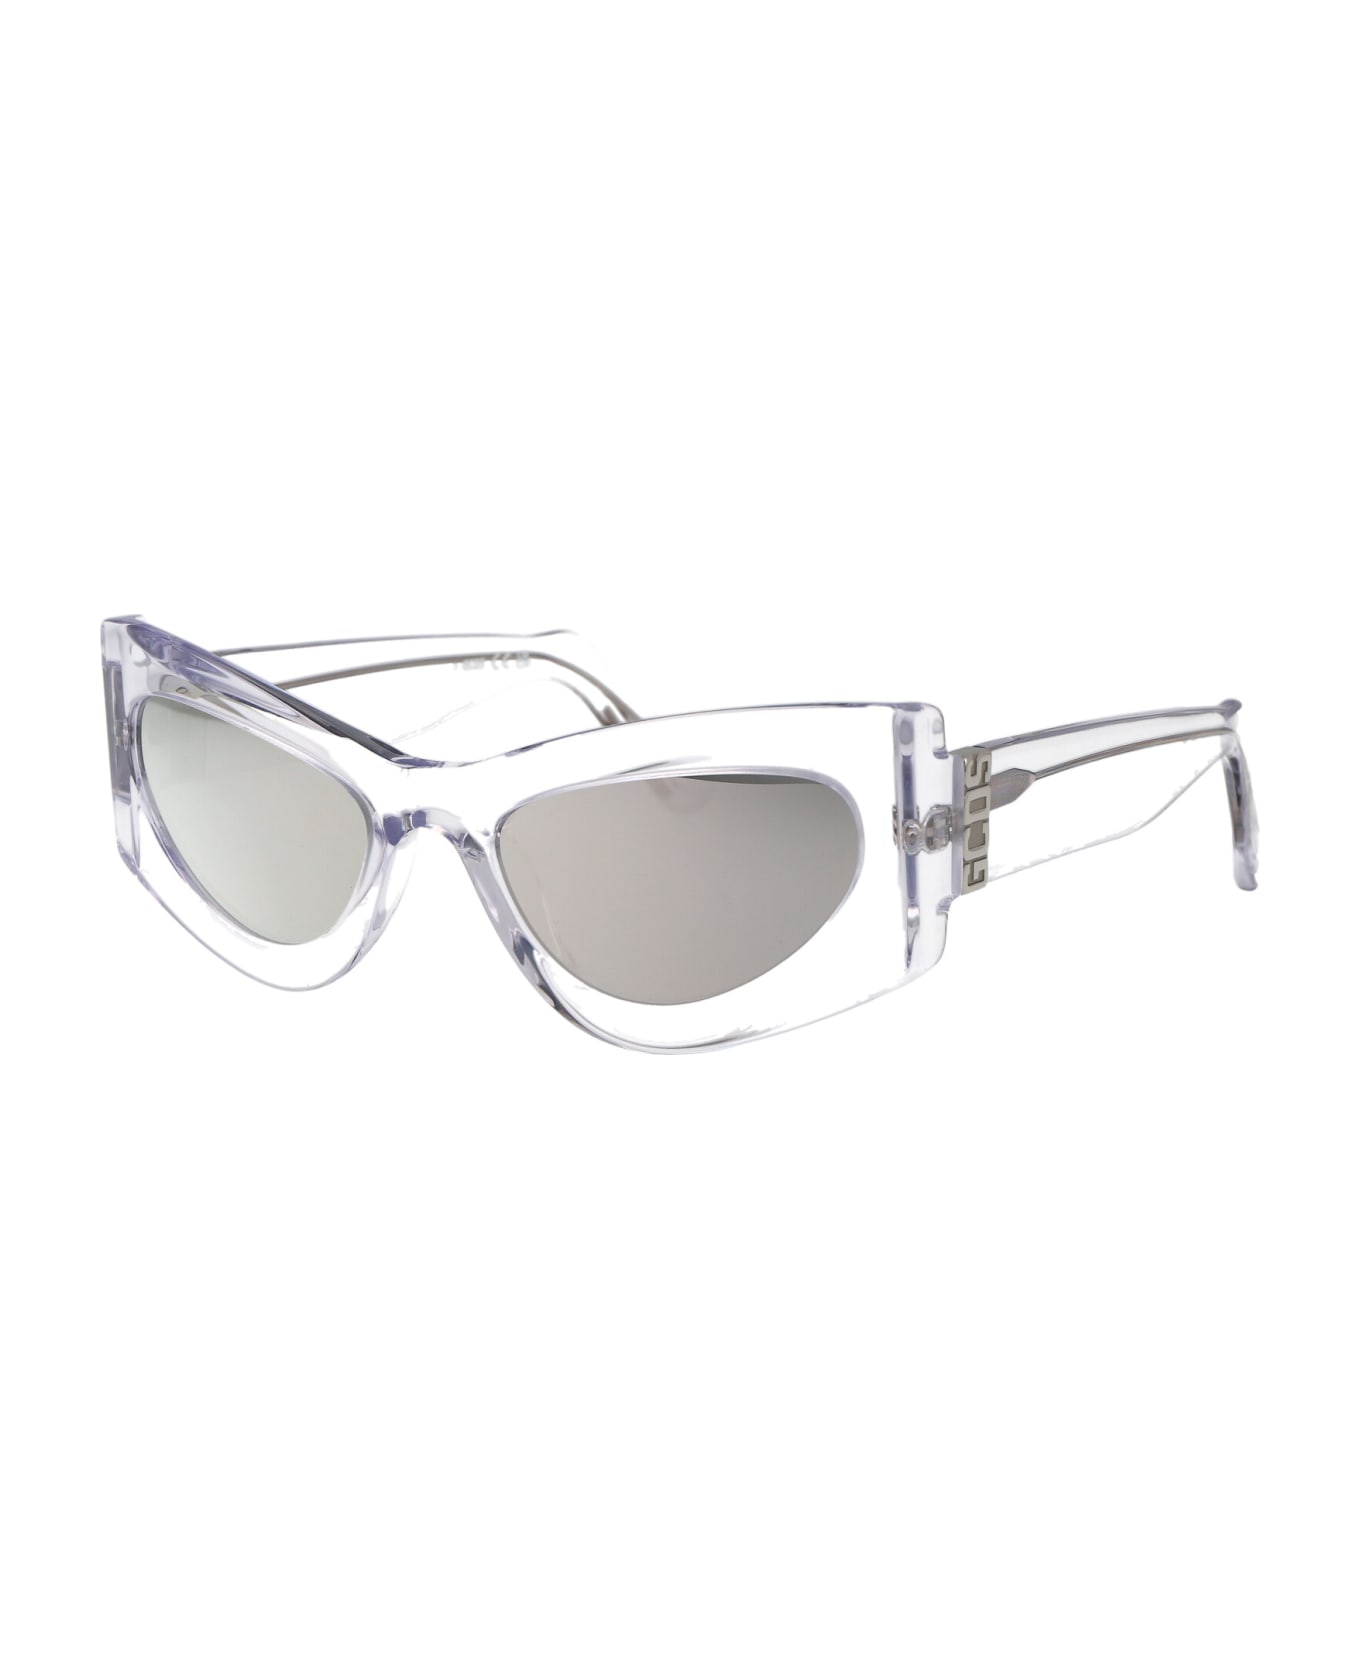 GCDS Gd0036 Sunglasses - 26C CRYSTAL サングラス